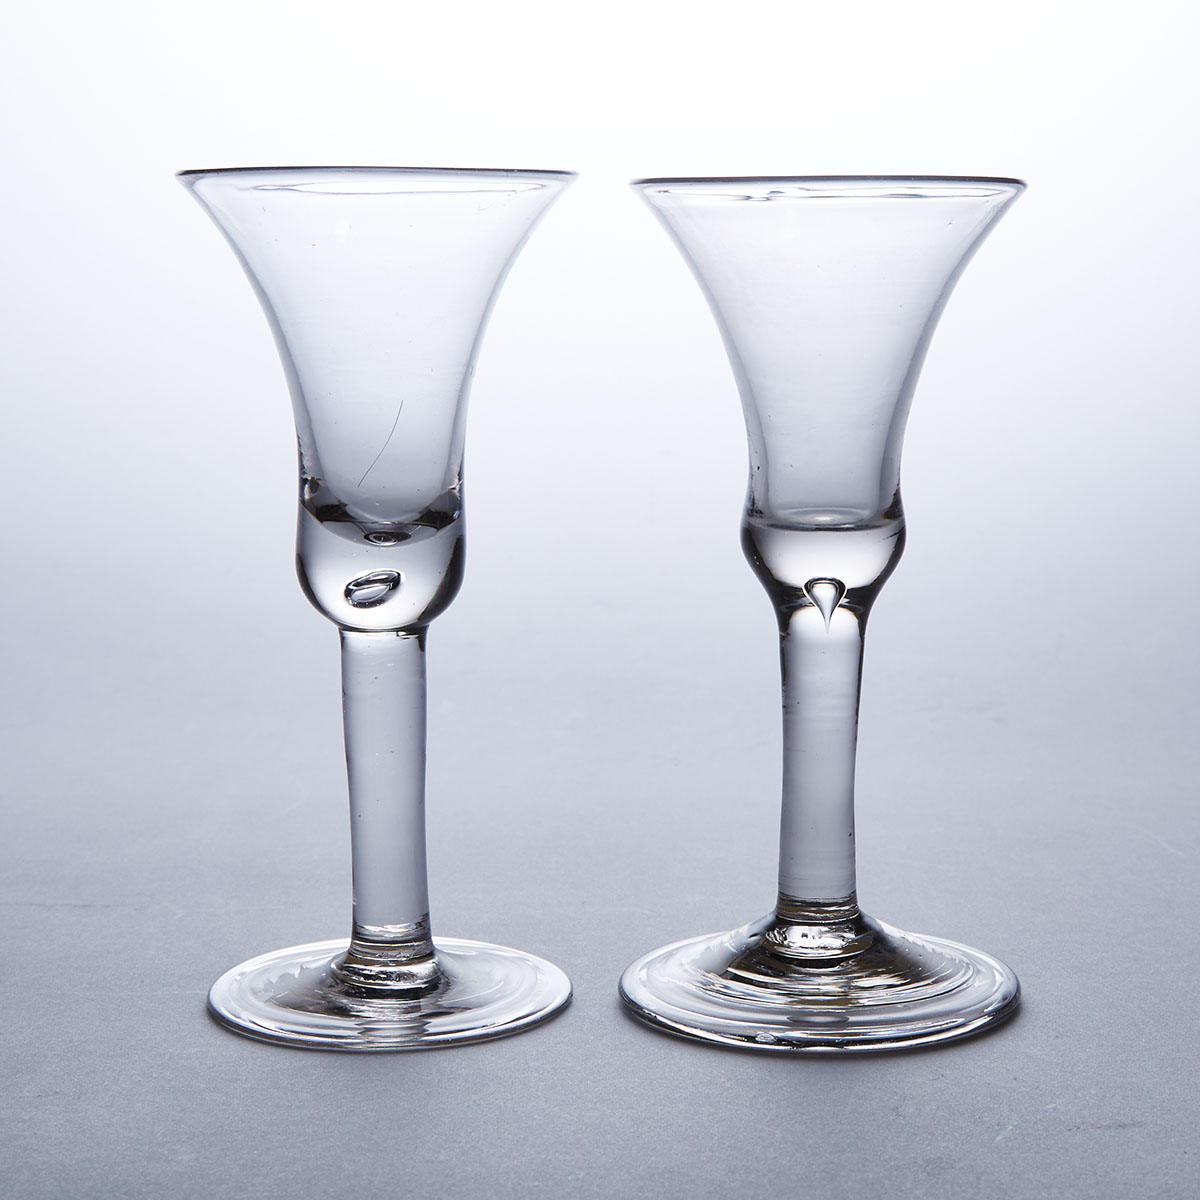 Pair of English Teared Plain Stemmed Wine Glasses, mid-18th century